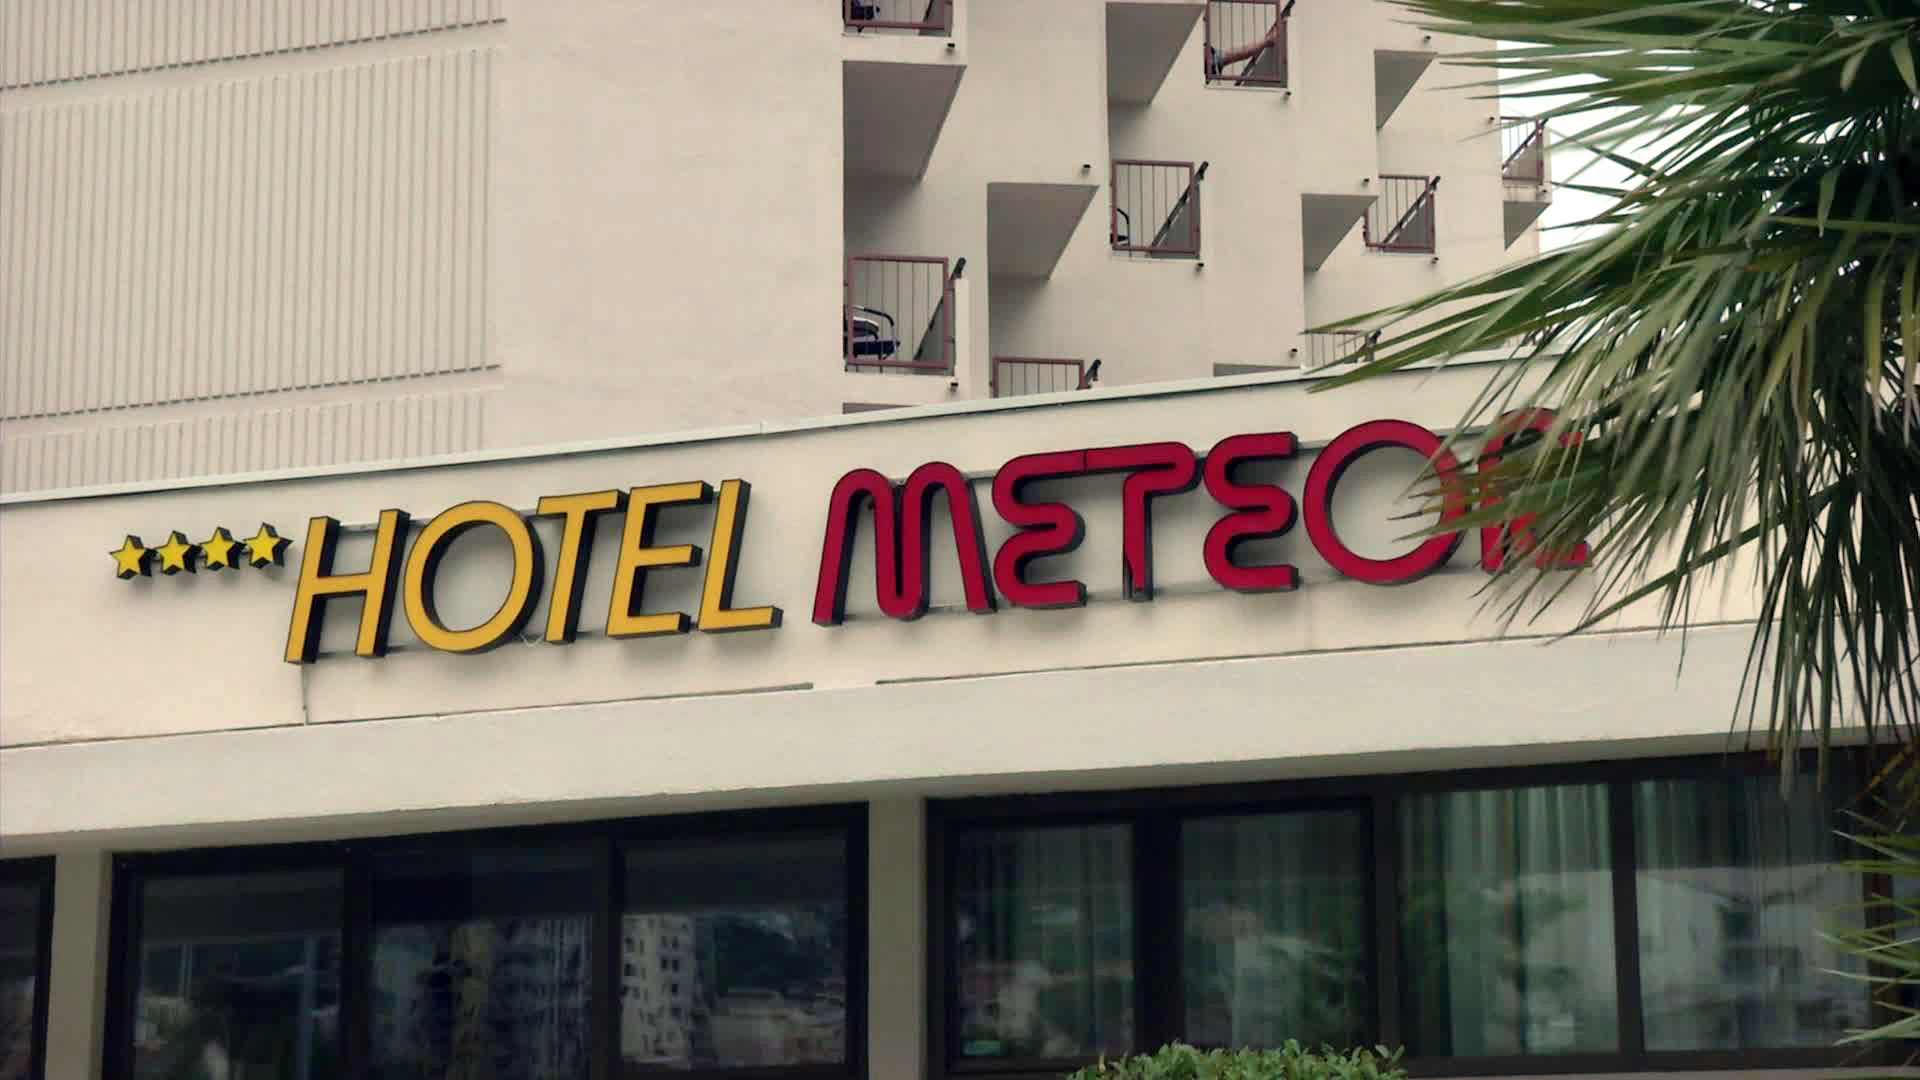 Valamar Meteor Hotel